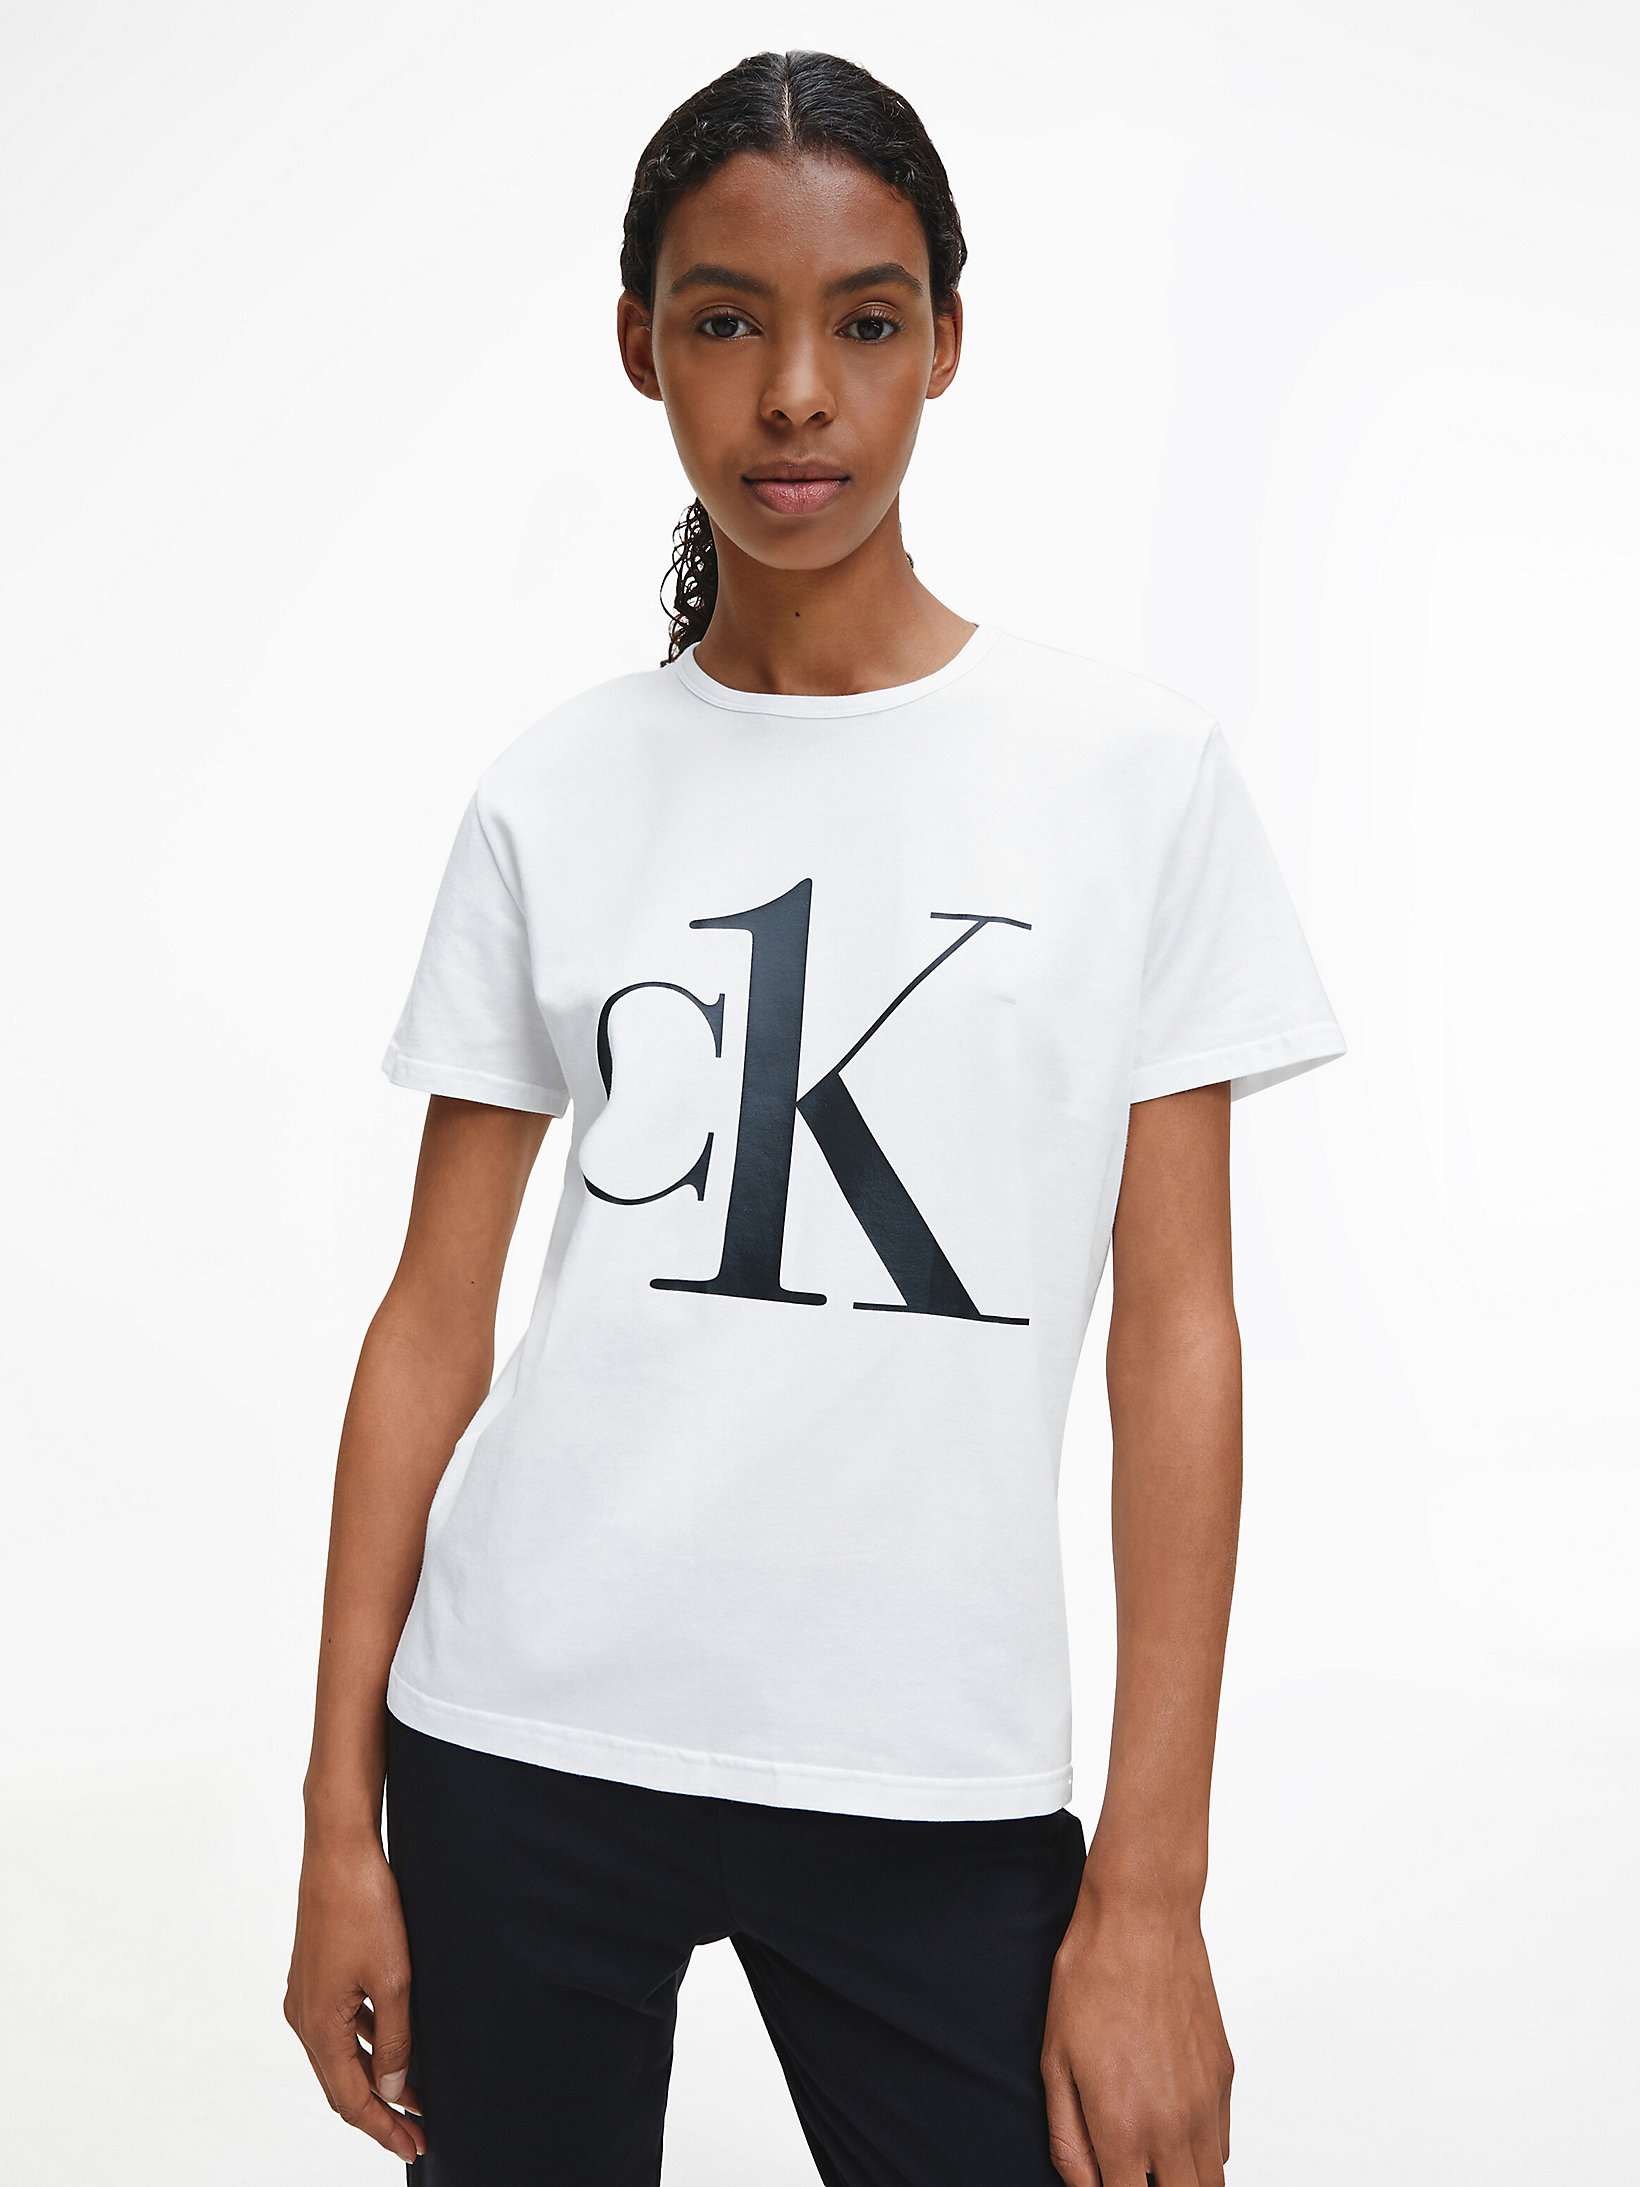 Haut De Pyjama - CK One > White_black Logo > undefined femmes > Calvin Klein